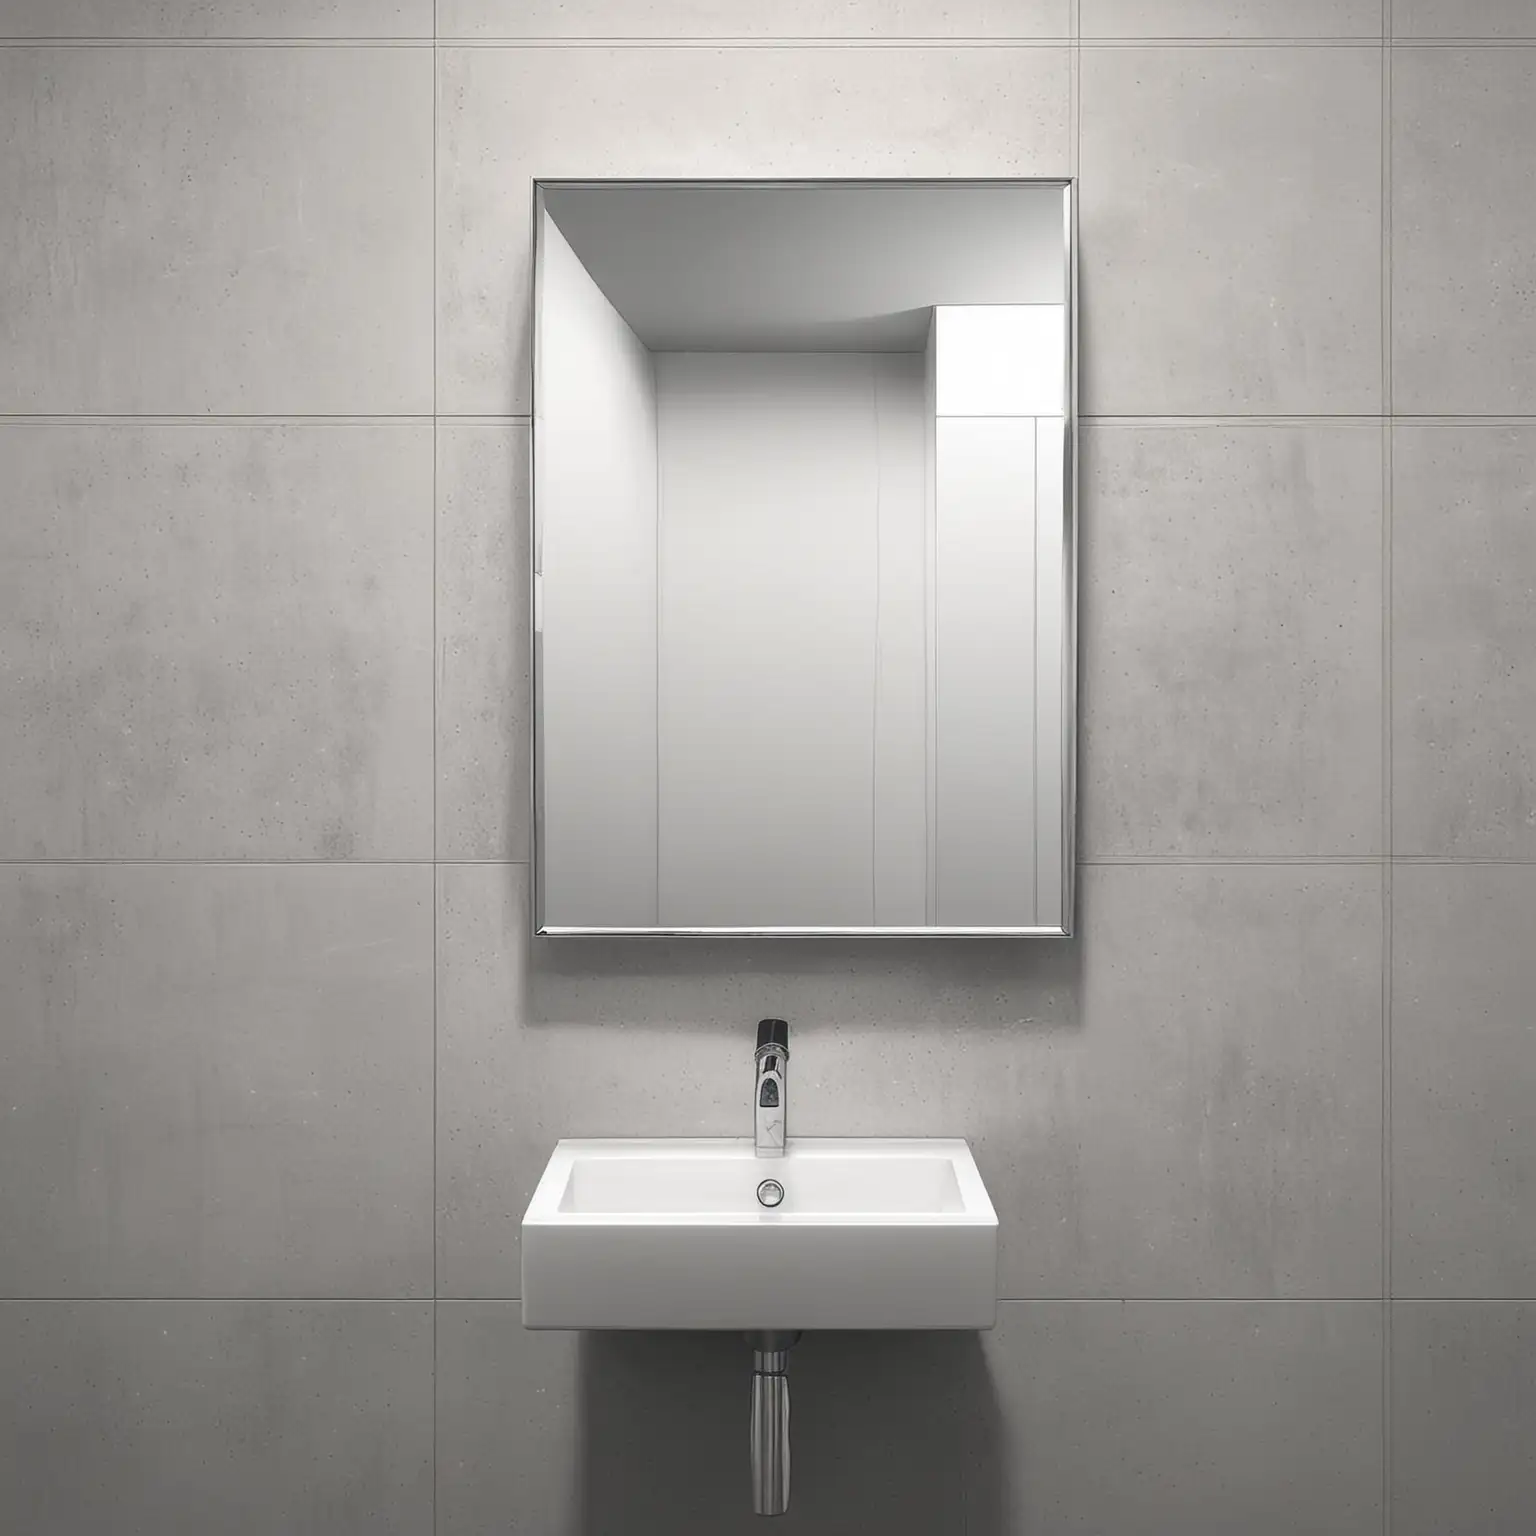 Minimalistic Sketch of Mirror in Public Toilet